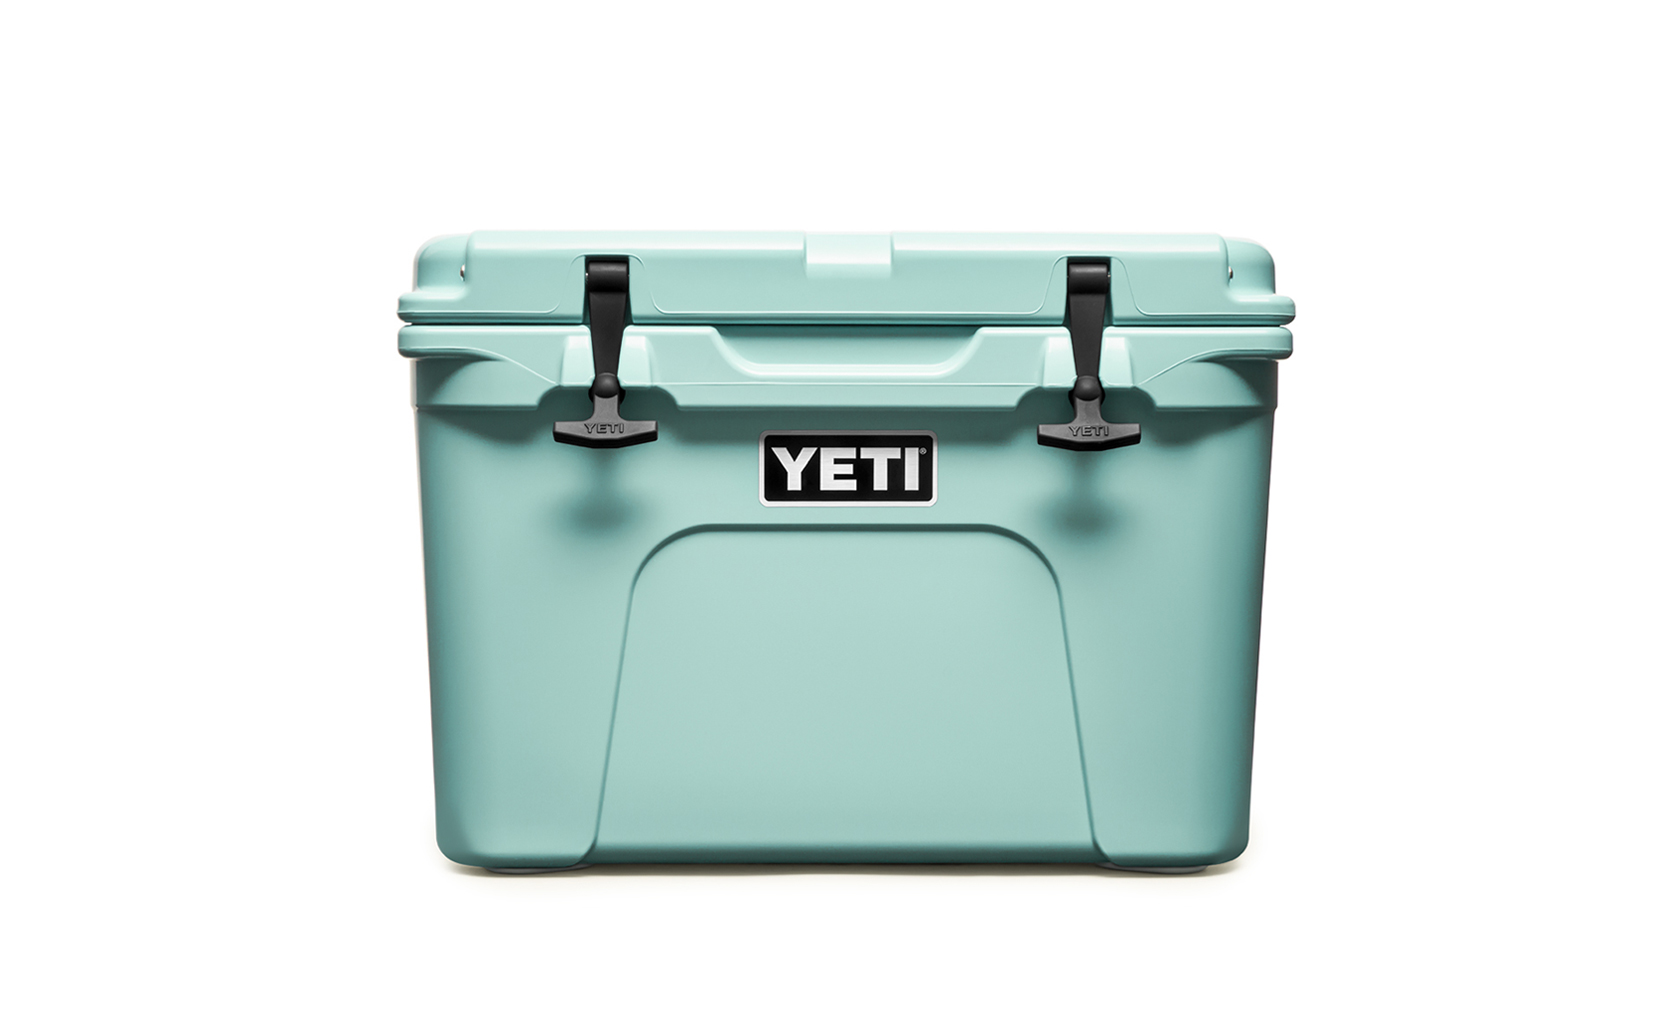  YETI Tundra 65 Cooler, Aquifer Blue : Sports & Outdoors